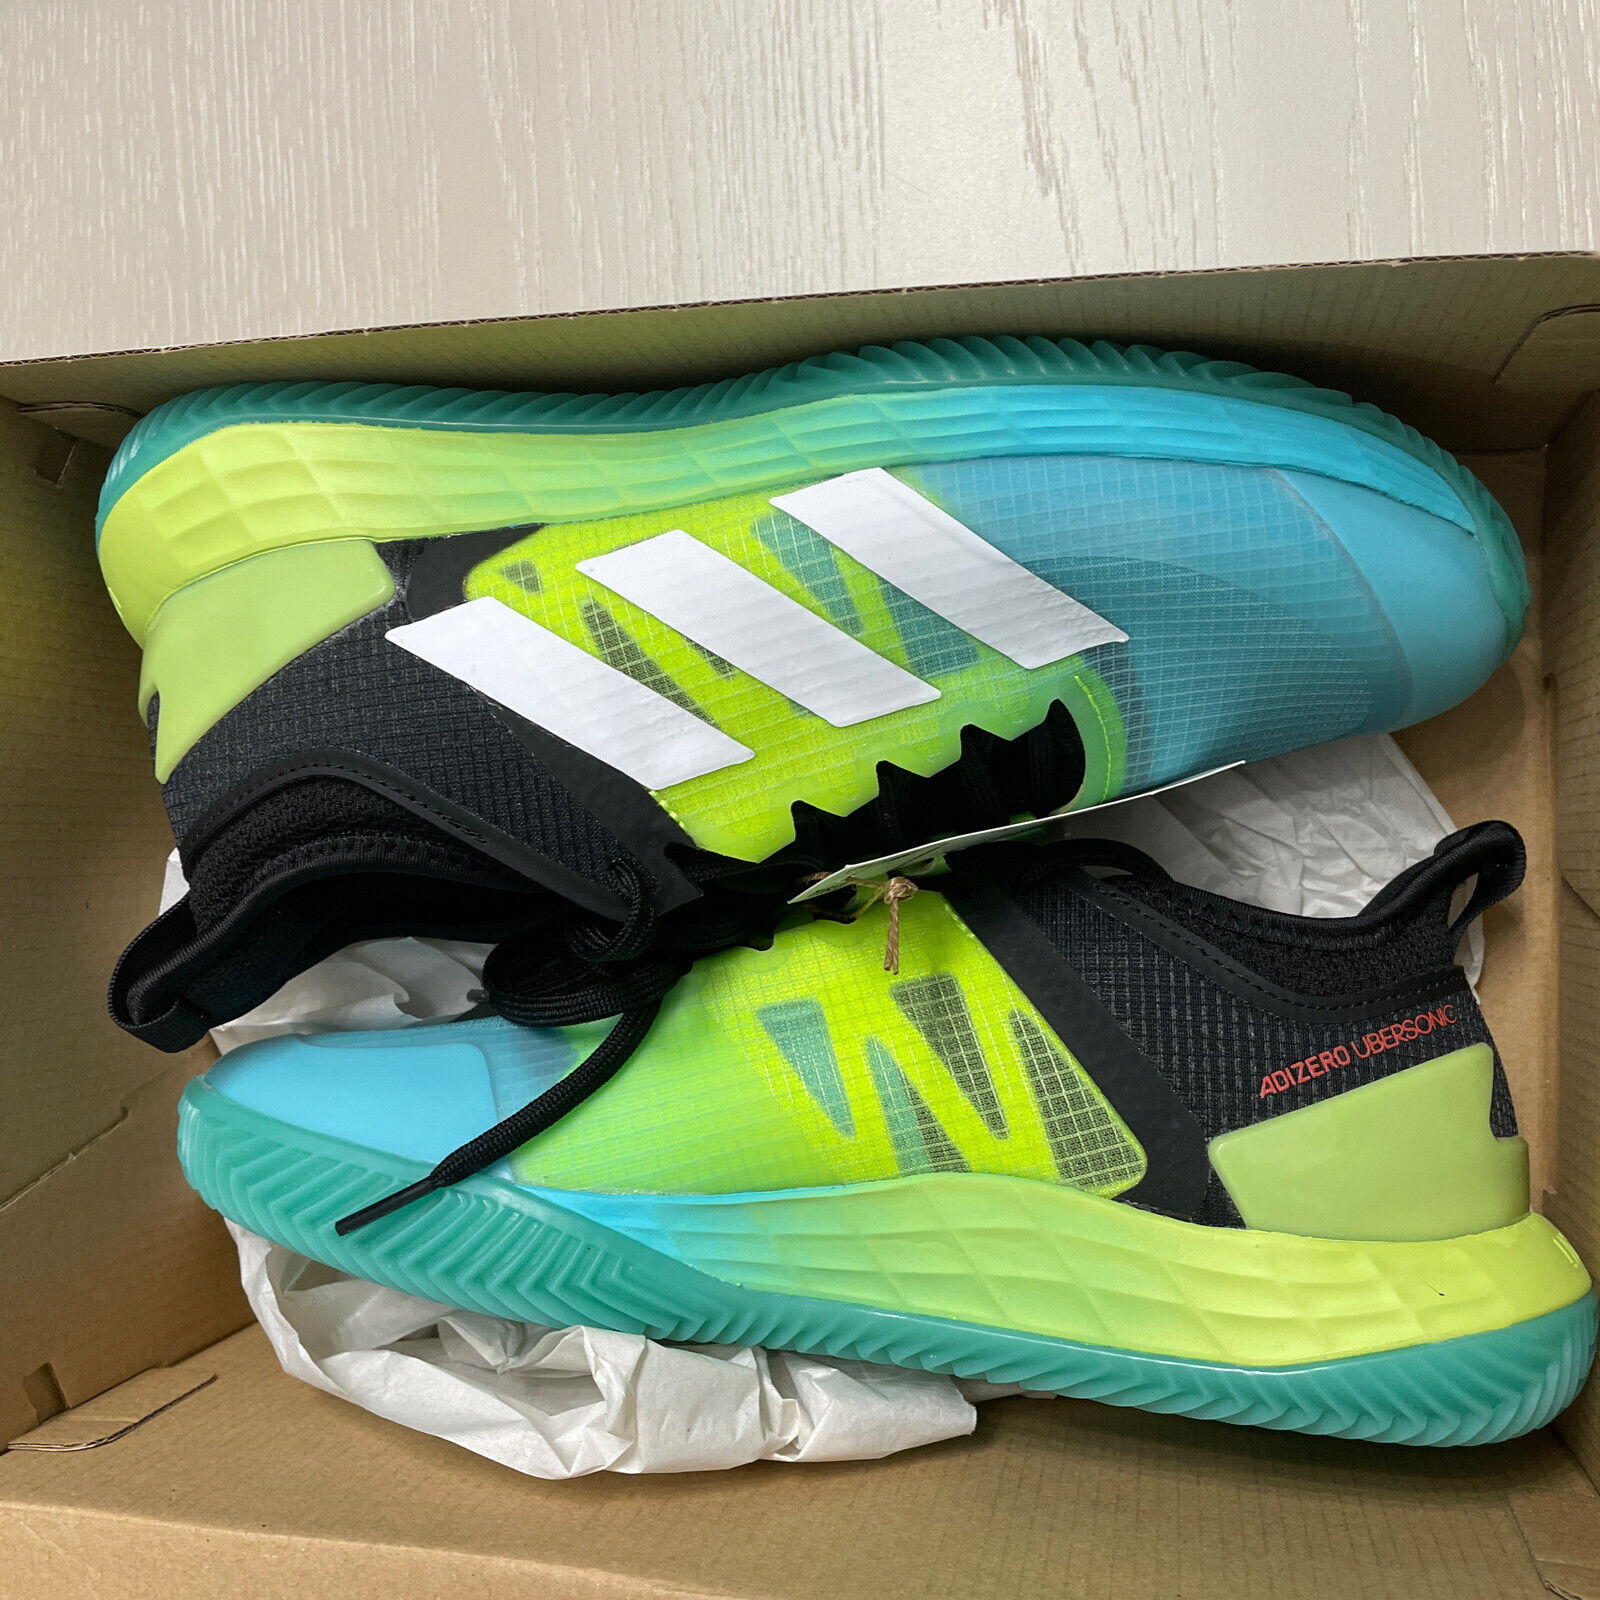 Adidas Ubersonic 4 Clay - Women’s Tennis Shoe Size 7.5